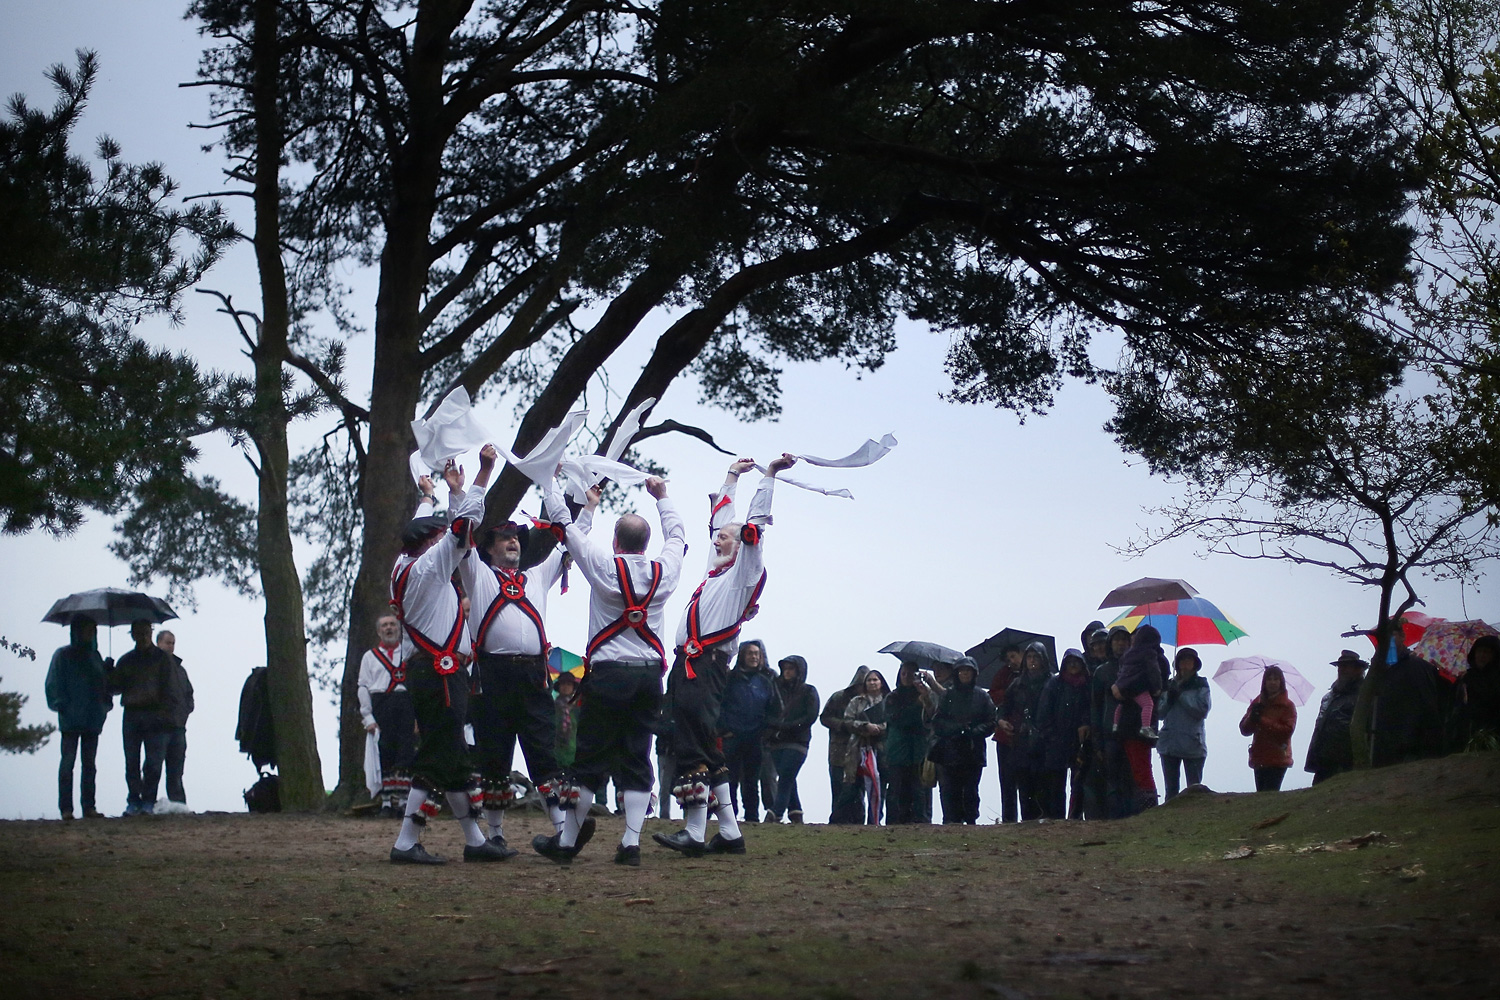 May 1, 2012. Pilgrim Morris Men dance on St. Martha's Hill at dawn in Chilworth, England.